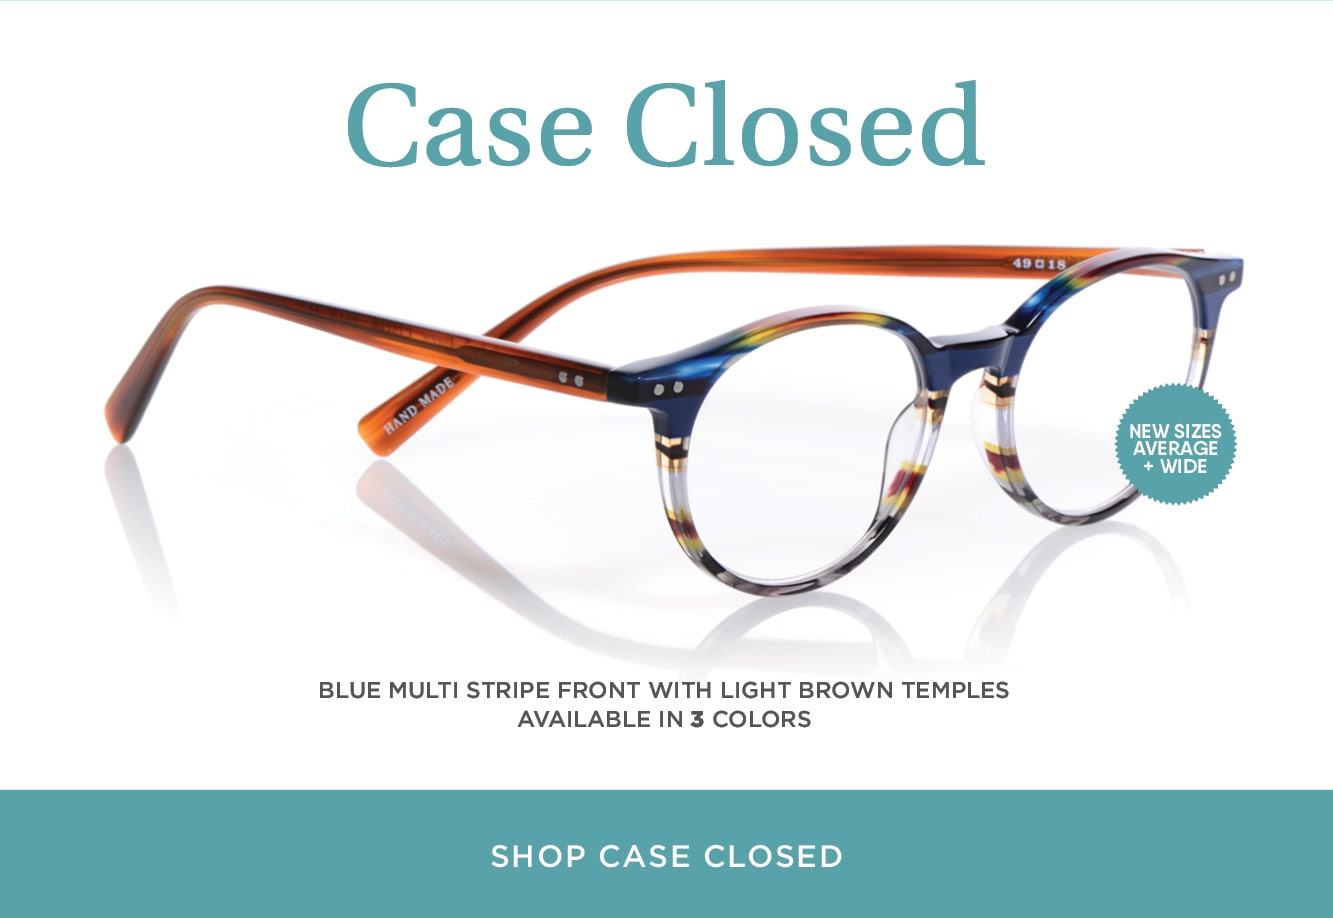 Shop Case Closed